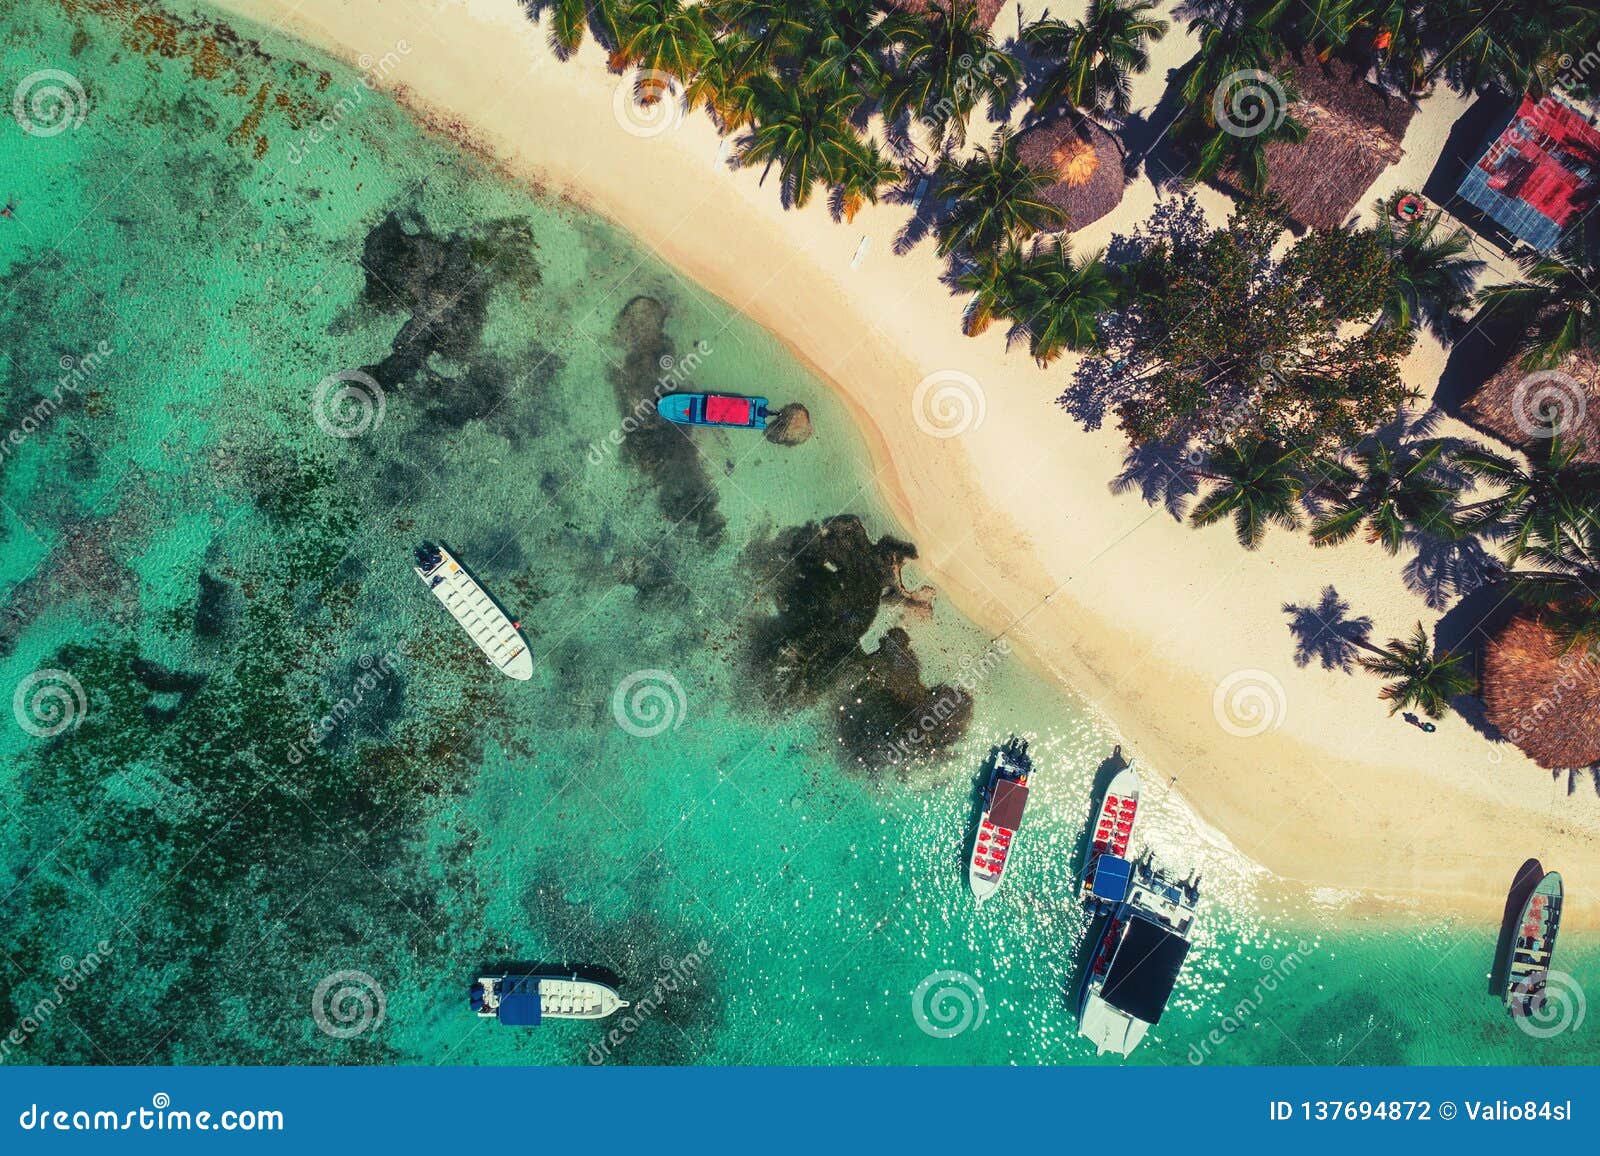 aerial view of tropical island beach in punta cana resort, dominican republic